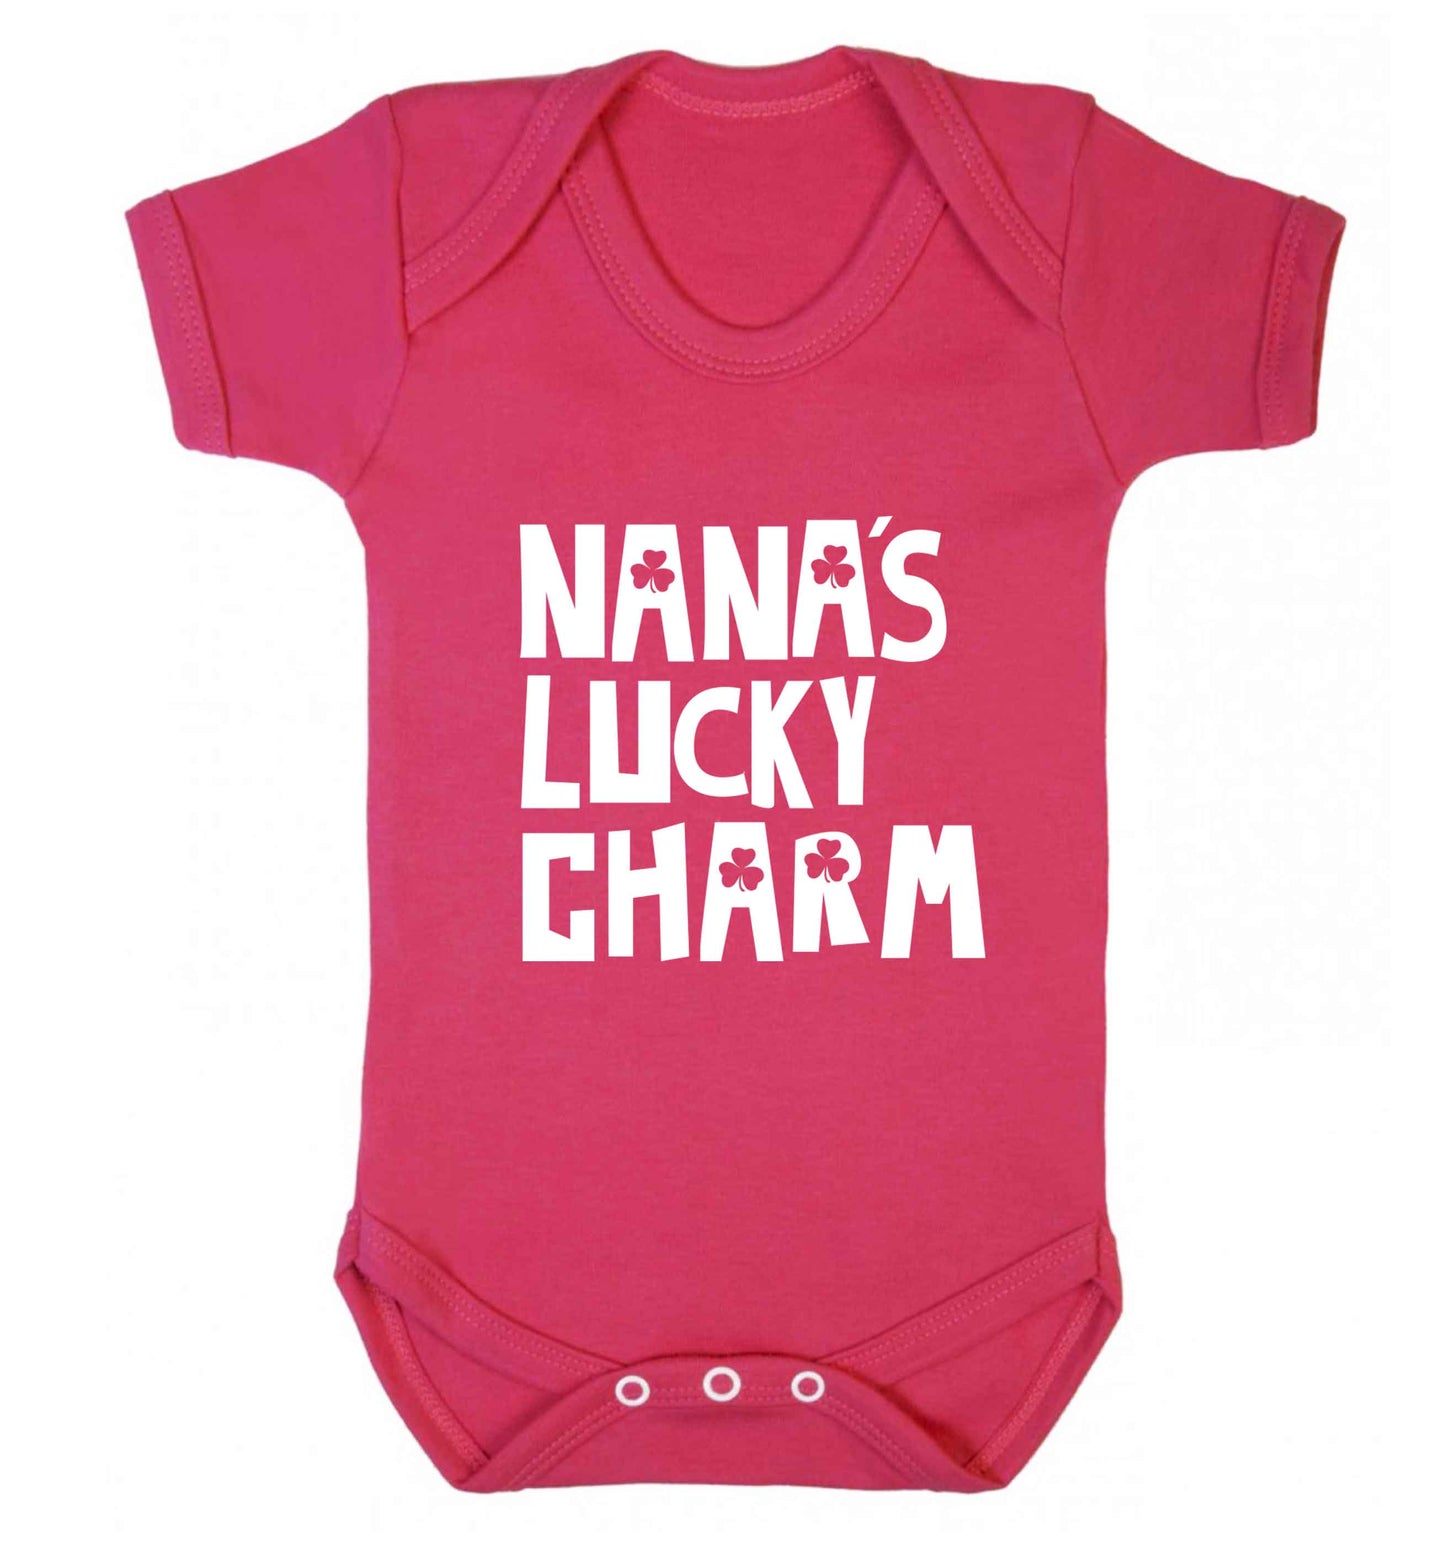 Nana's lucky charm baby vest dark pink 18-24 months